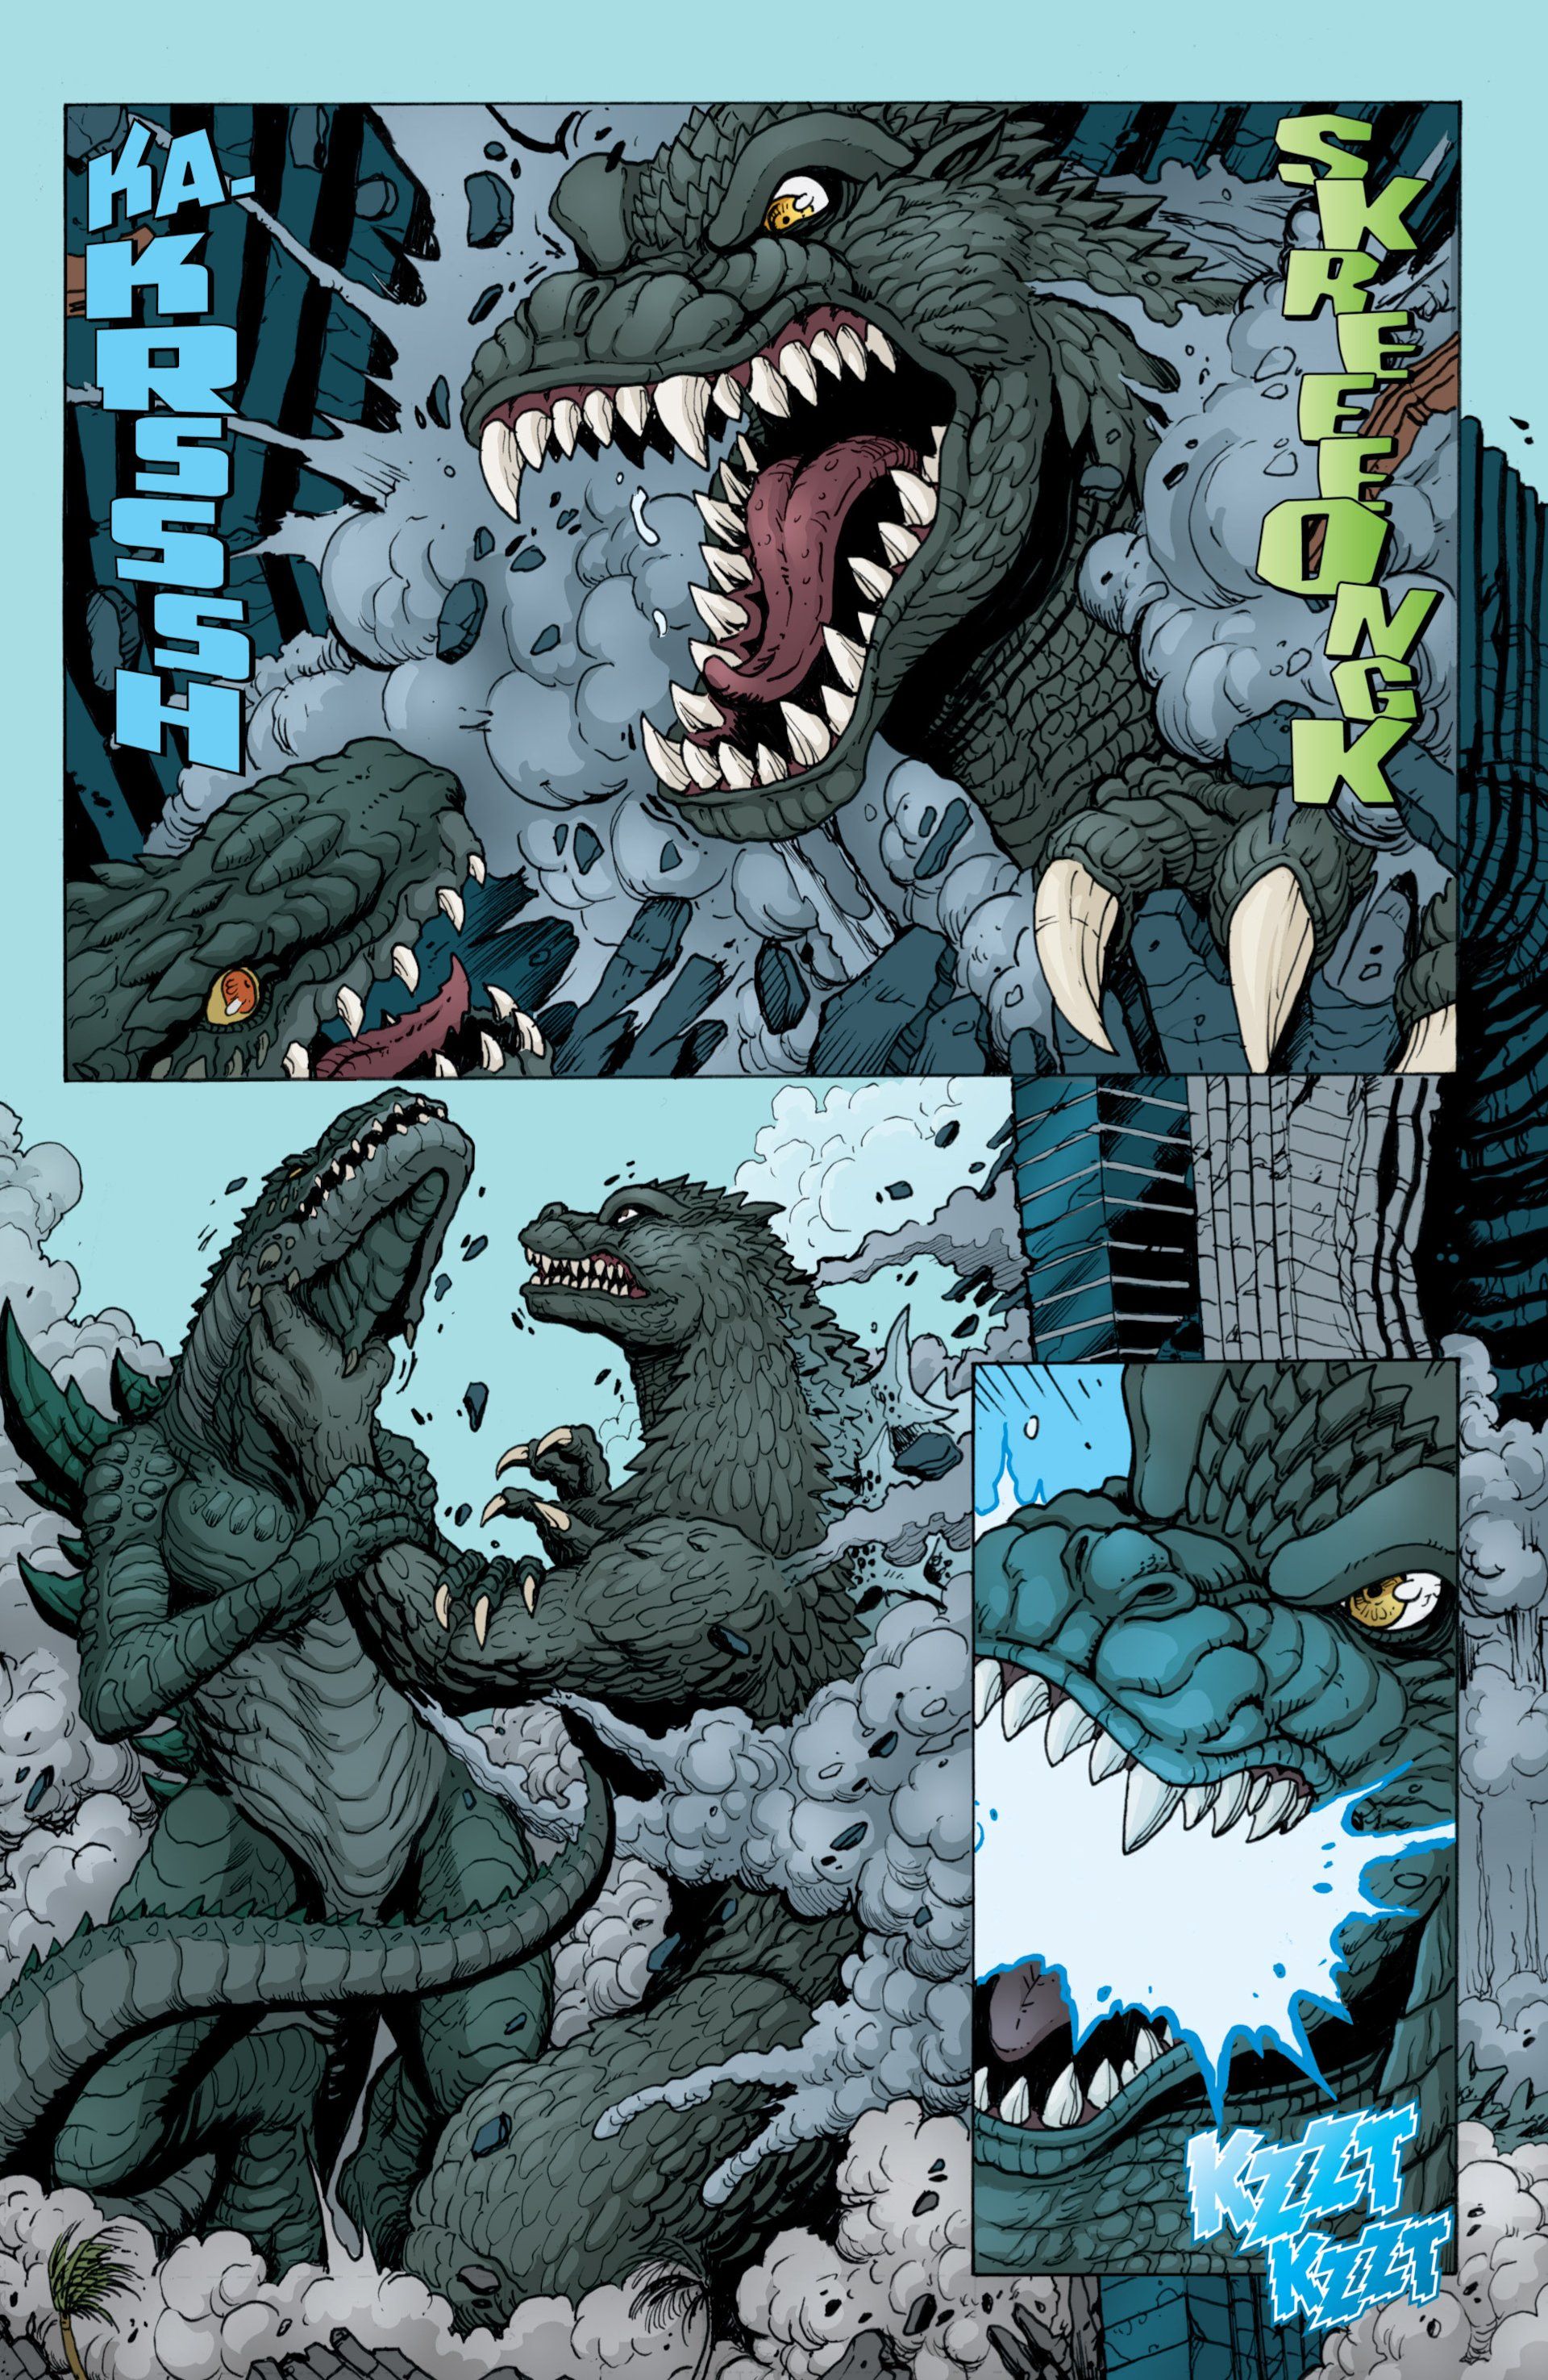 REVIEW: IDW's Best of Godzilla #1